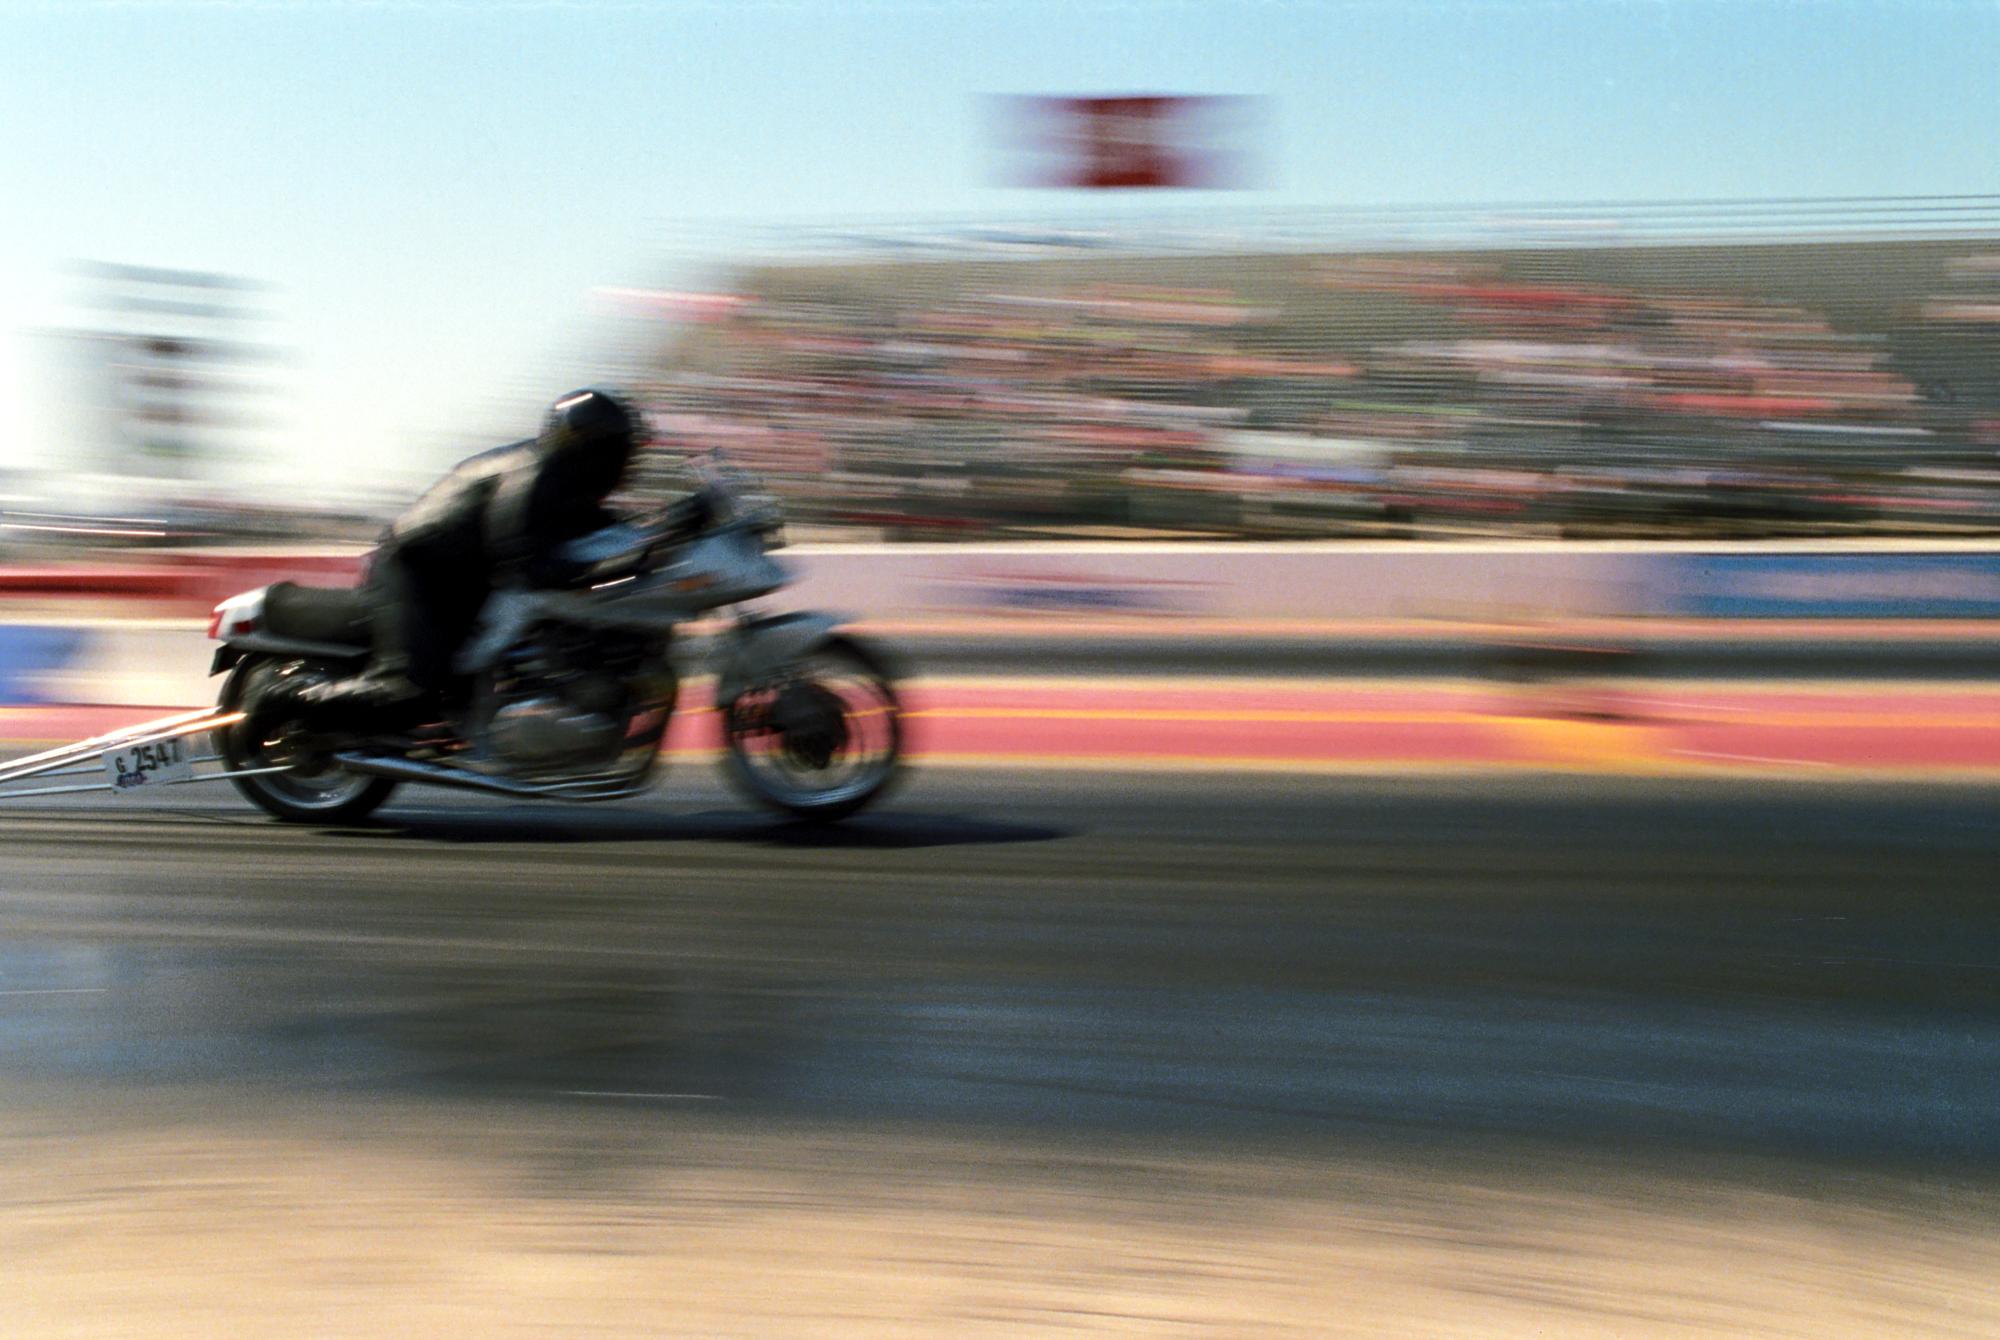 Texas Motor Drag Racing (1991) - Drag Racing Motion #9